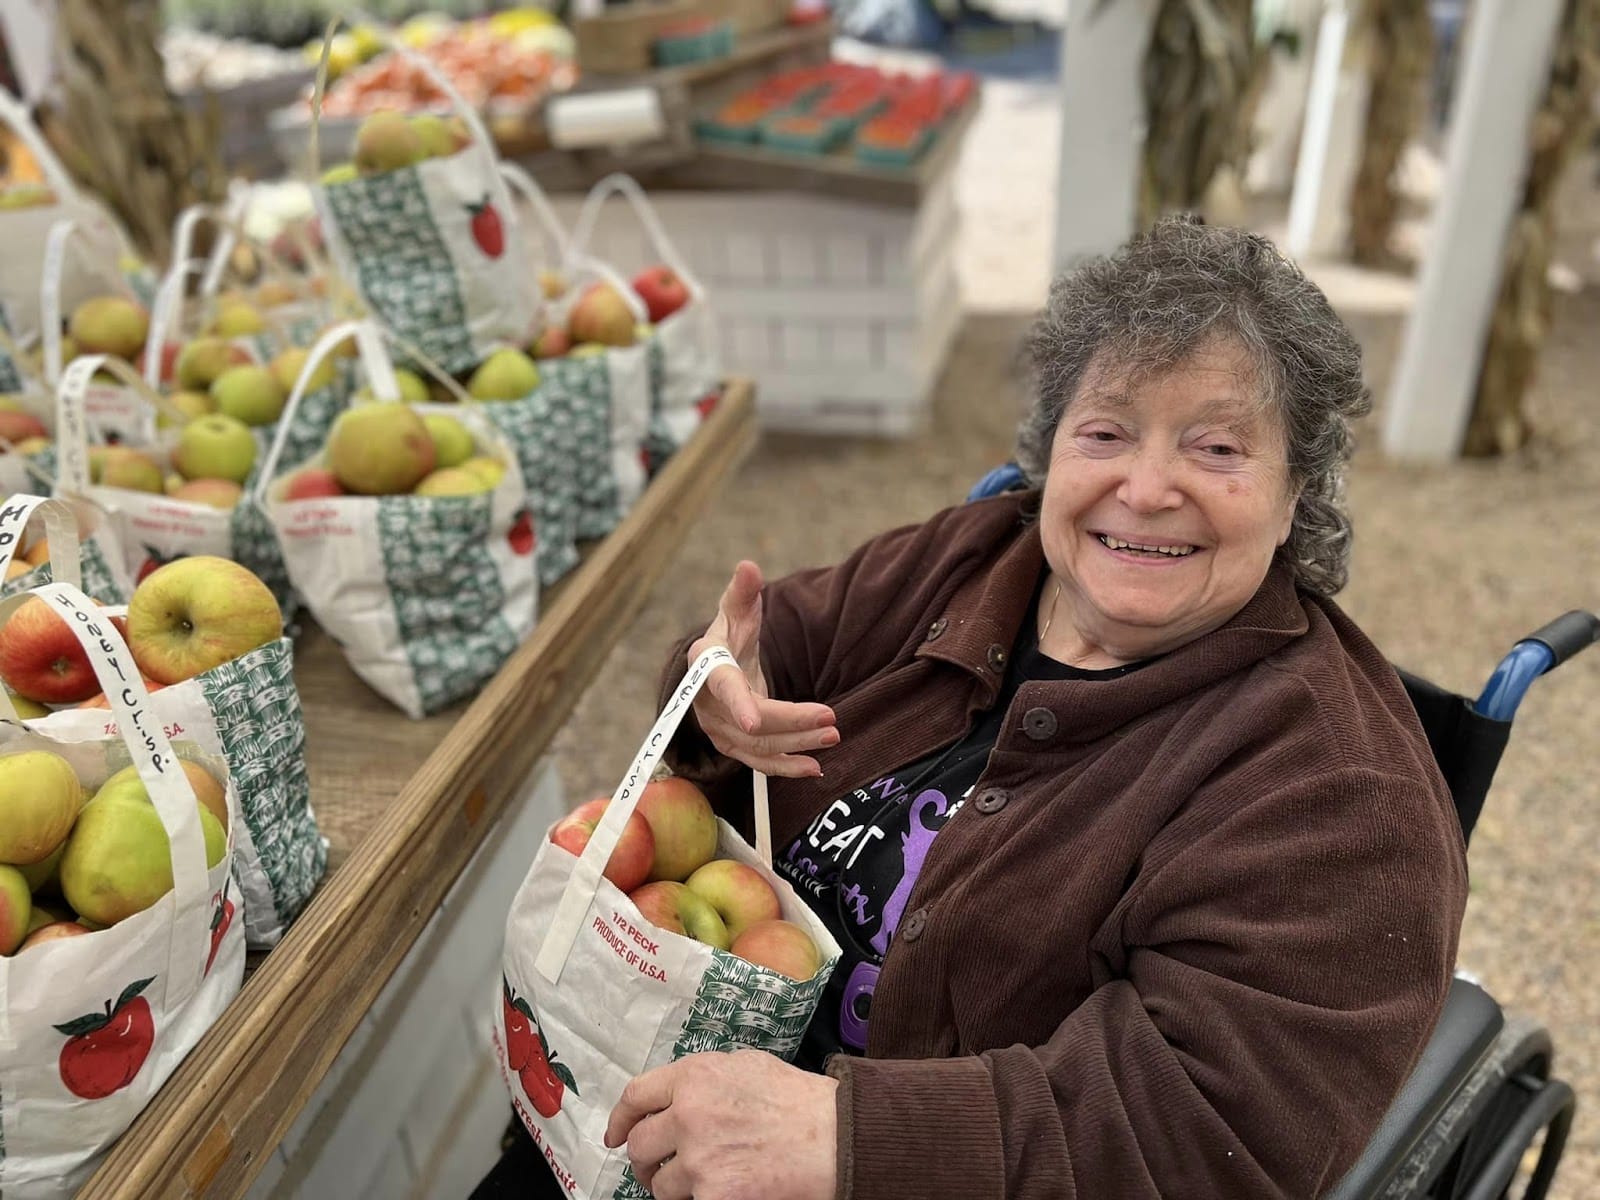 A senior citizen holding a bushel of apples